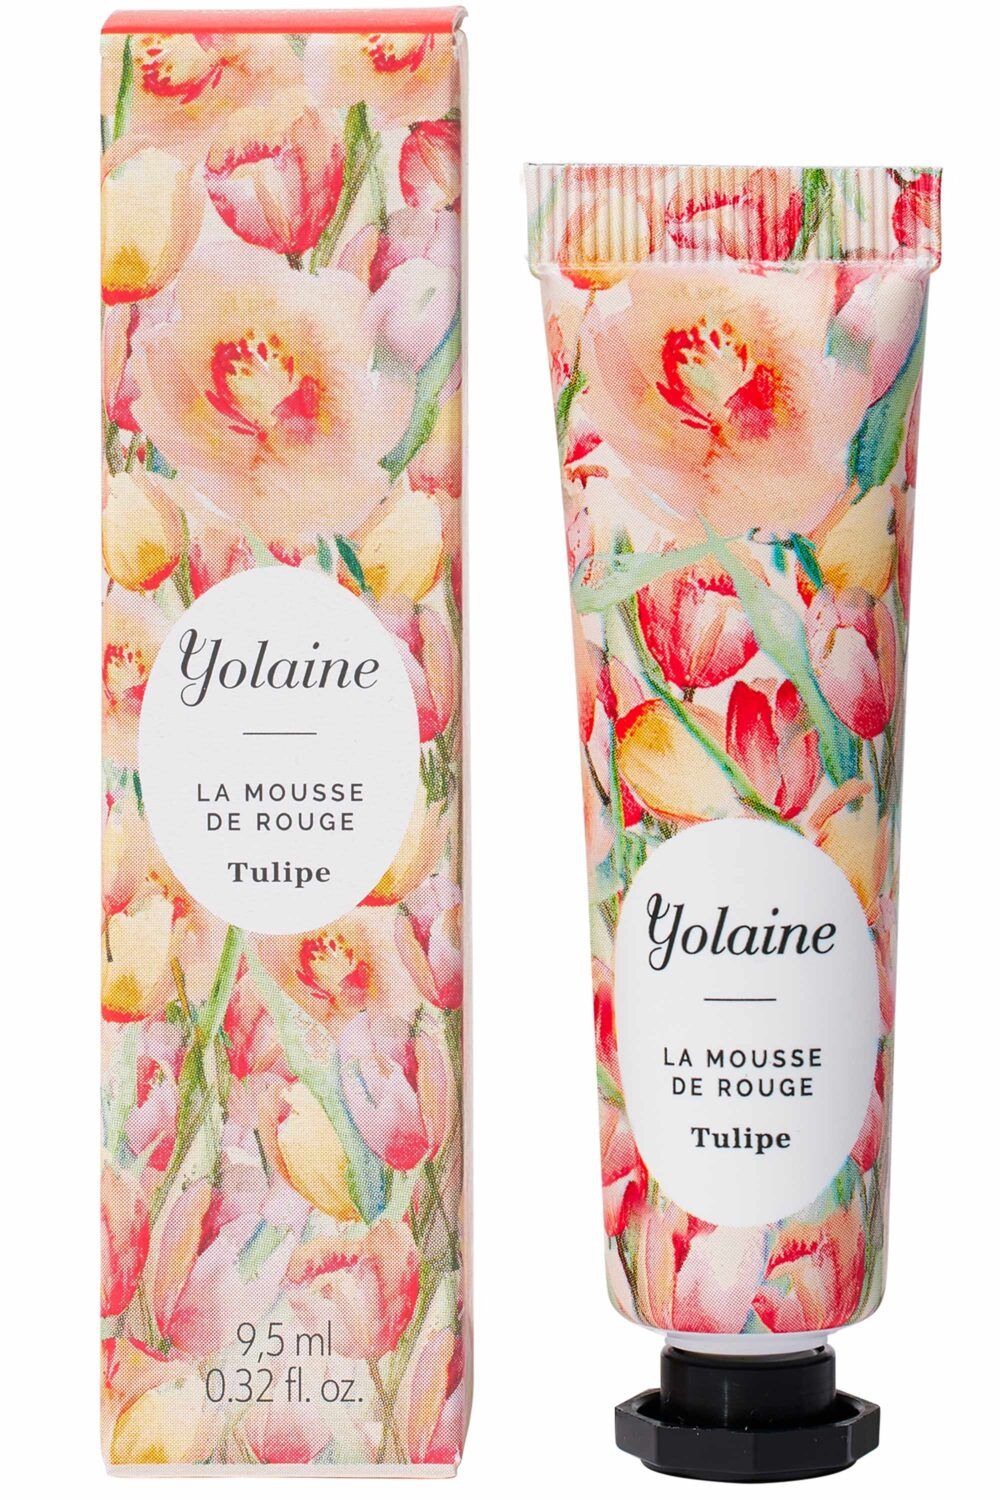 Yolaine - La mousse de rouge Tulipe